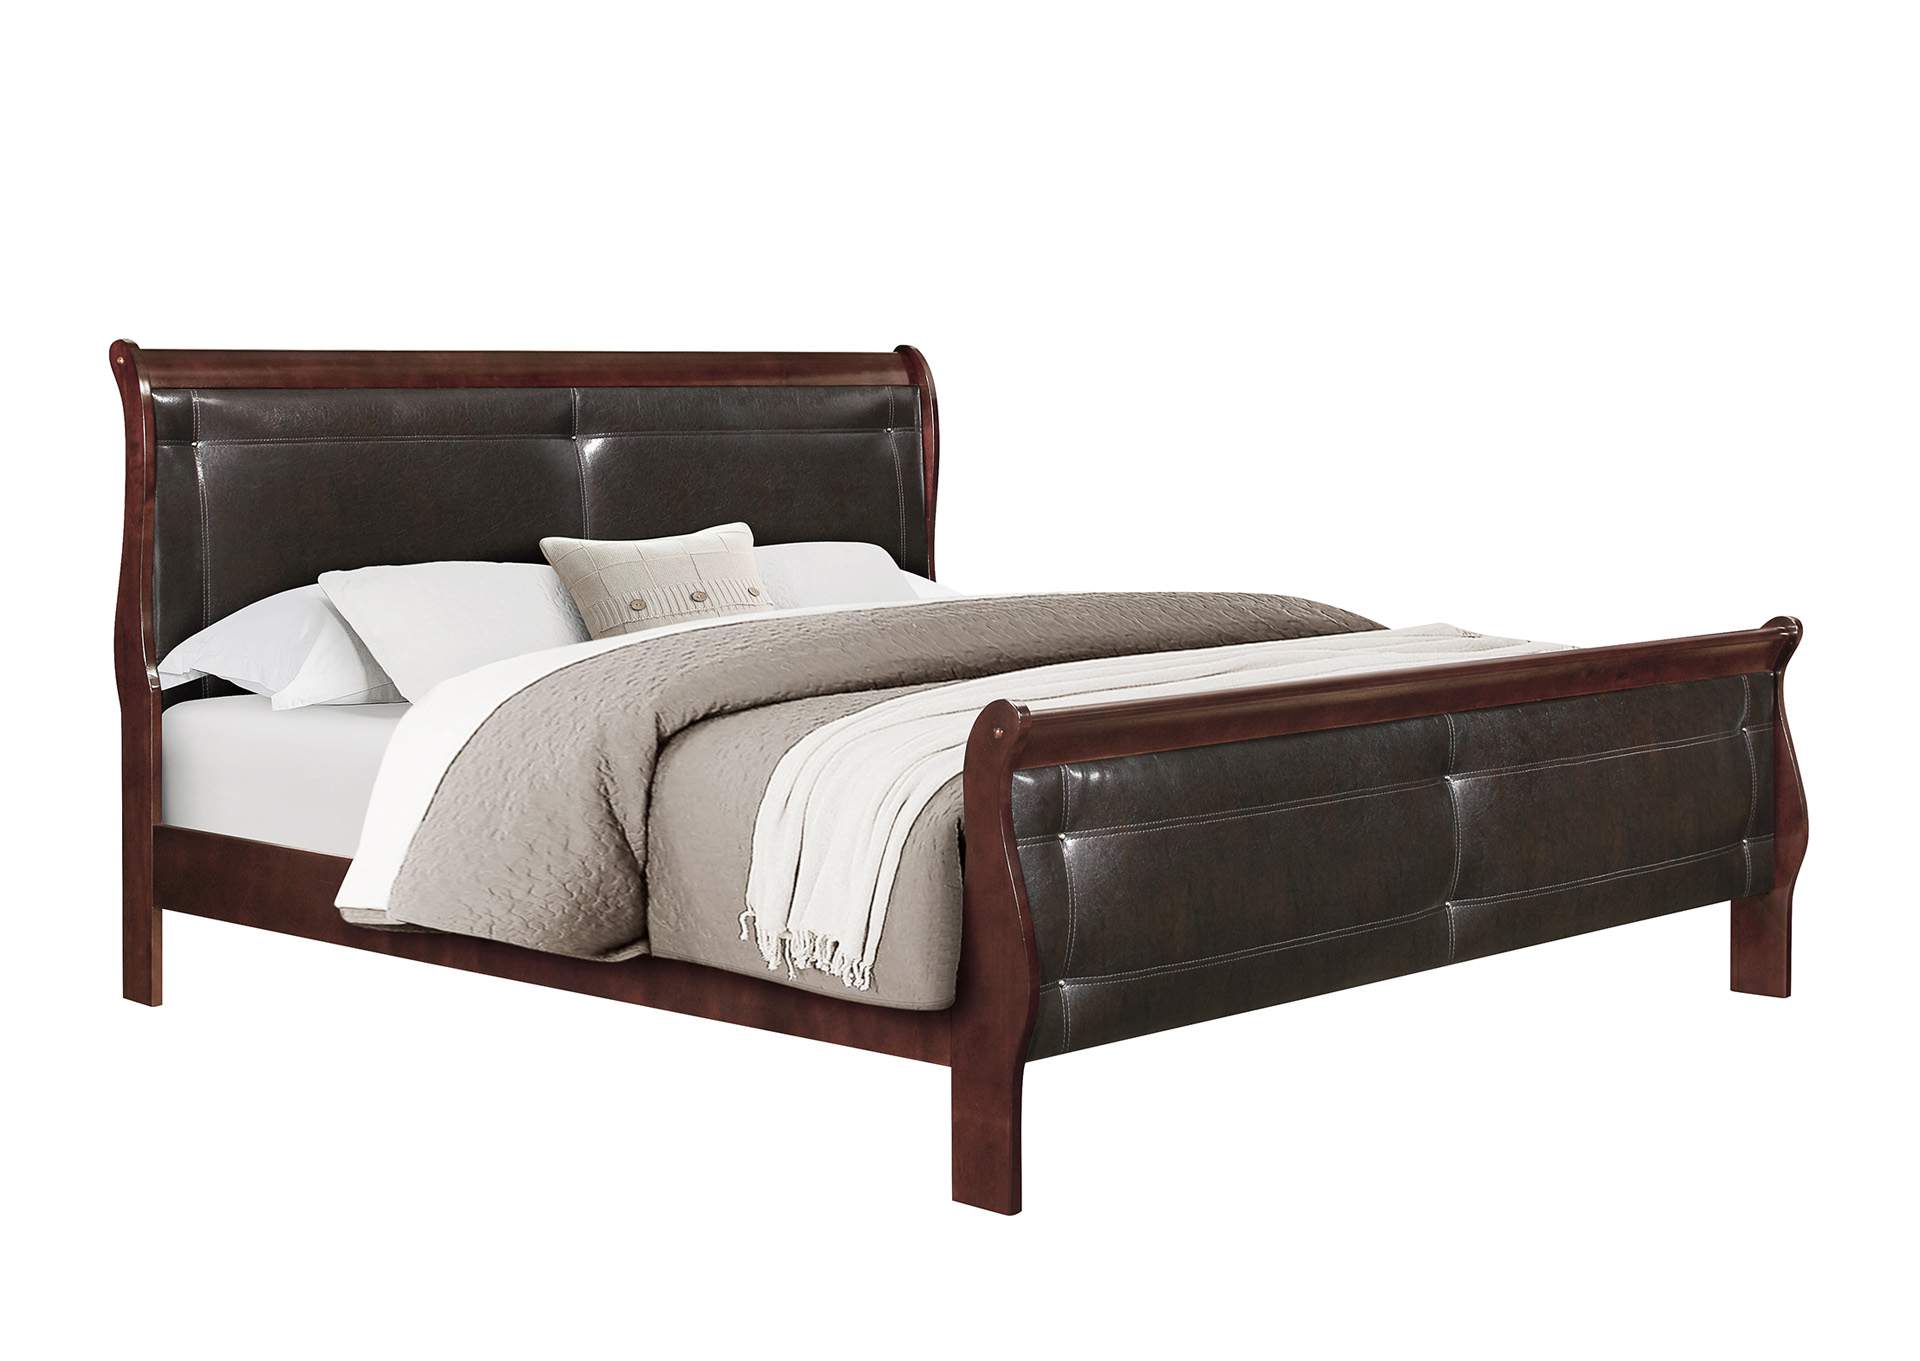 Merlot Marley Queen Bed,Global Furniture USA